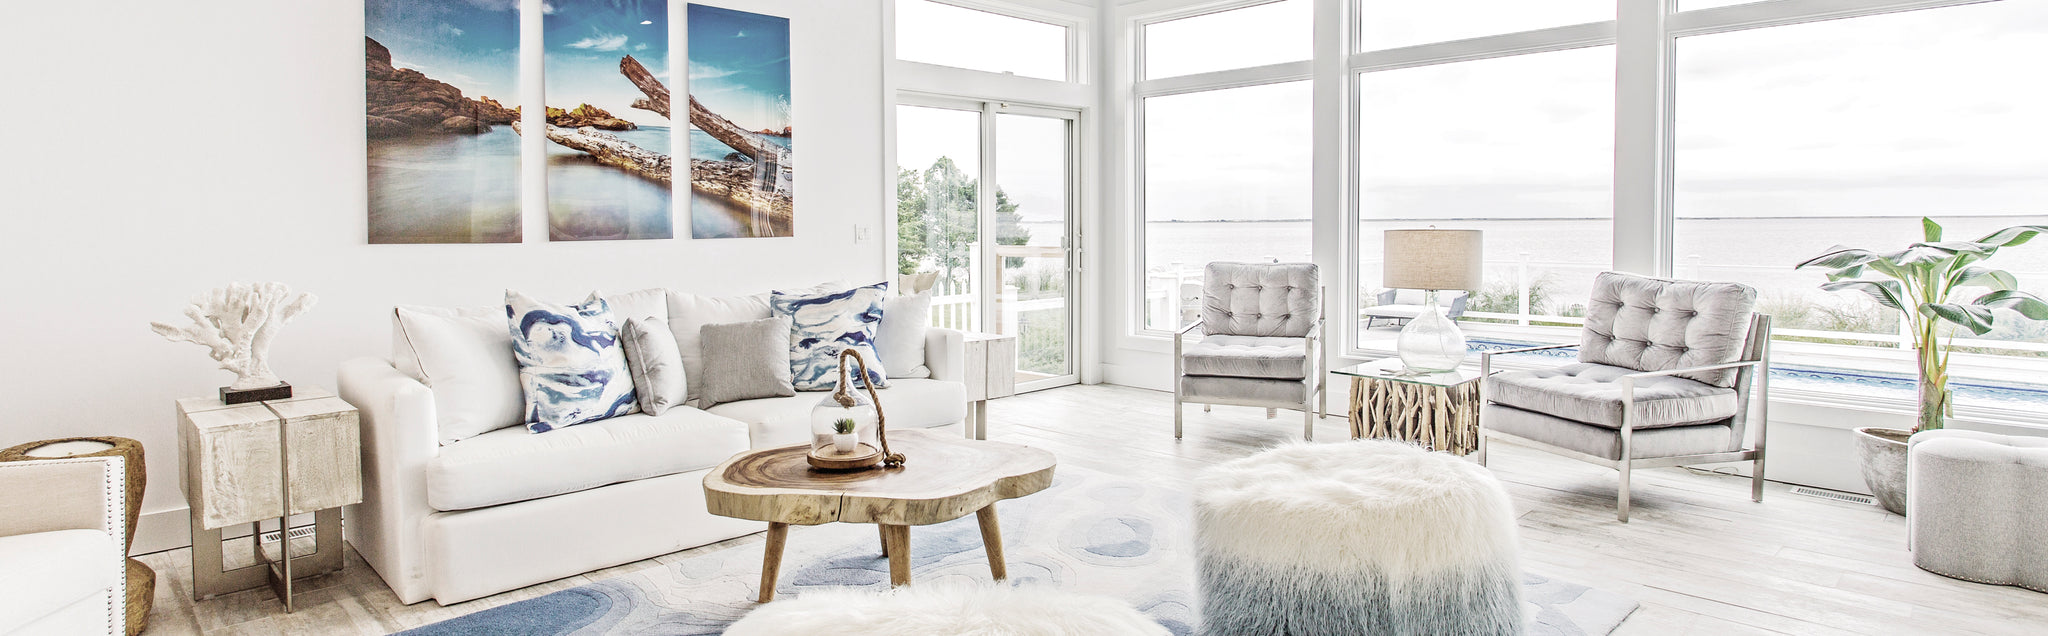 Ocean Blu Designs - Interior Design Portfolio - Center Moriches, Long Island, New York, NY